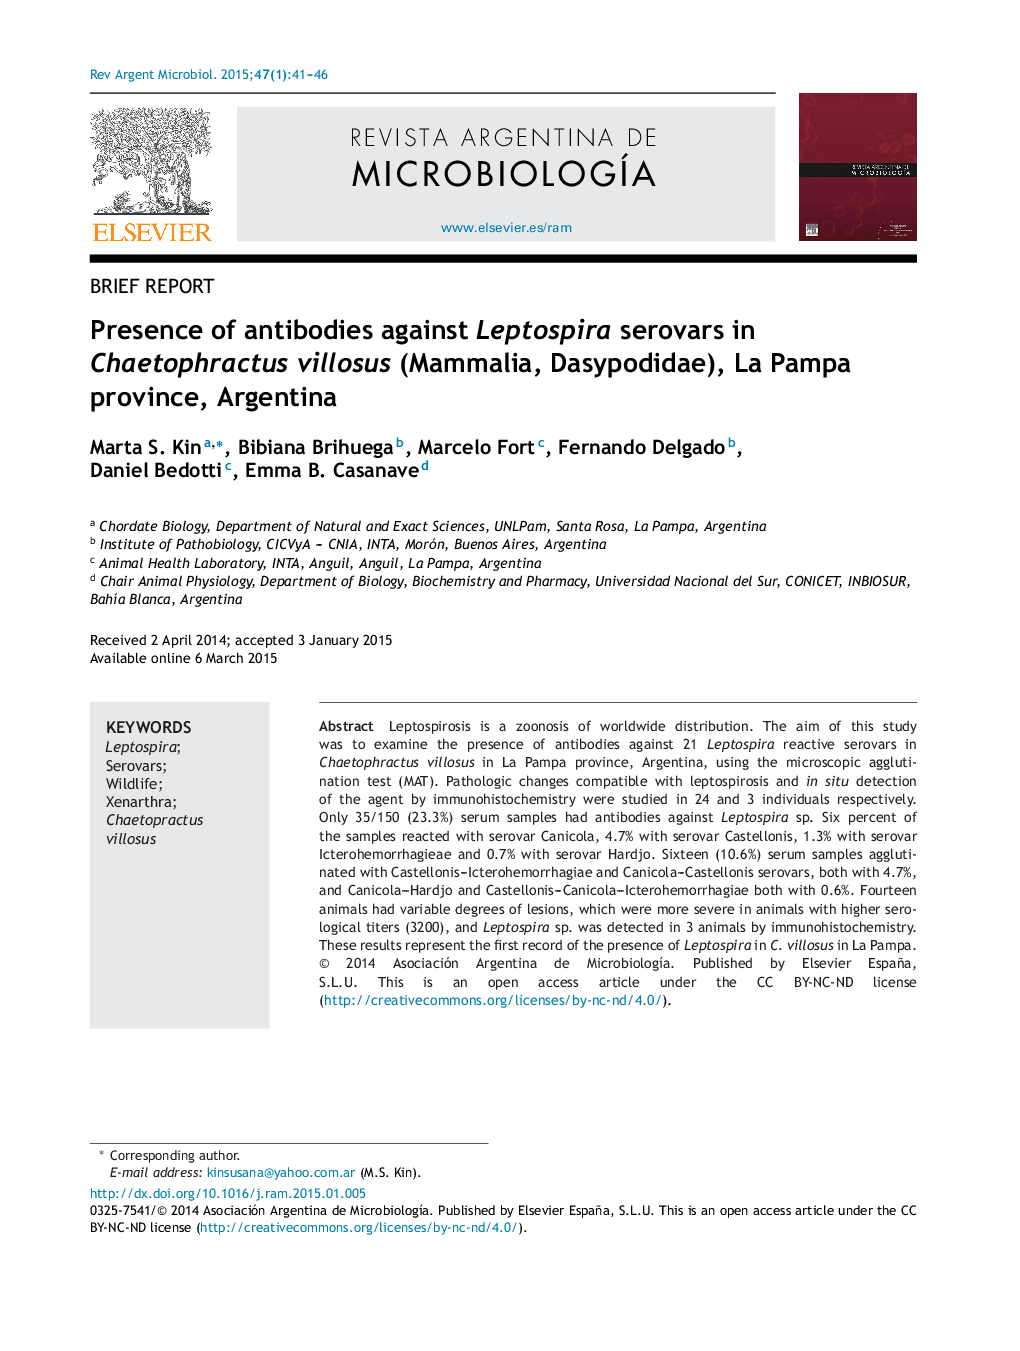 Presence of antibodies against Leptospira serovars in Chaetophractus villosus (Mammalia, Dasypodidae), La Pampa province, Argentina